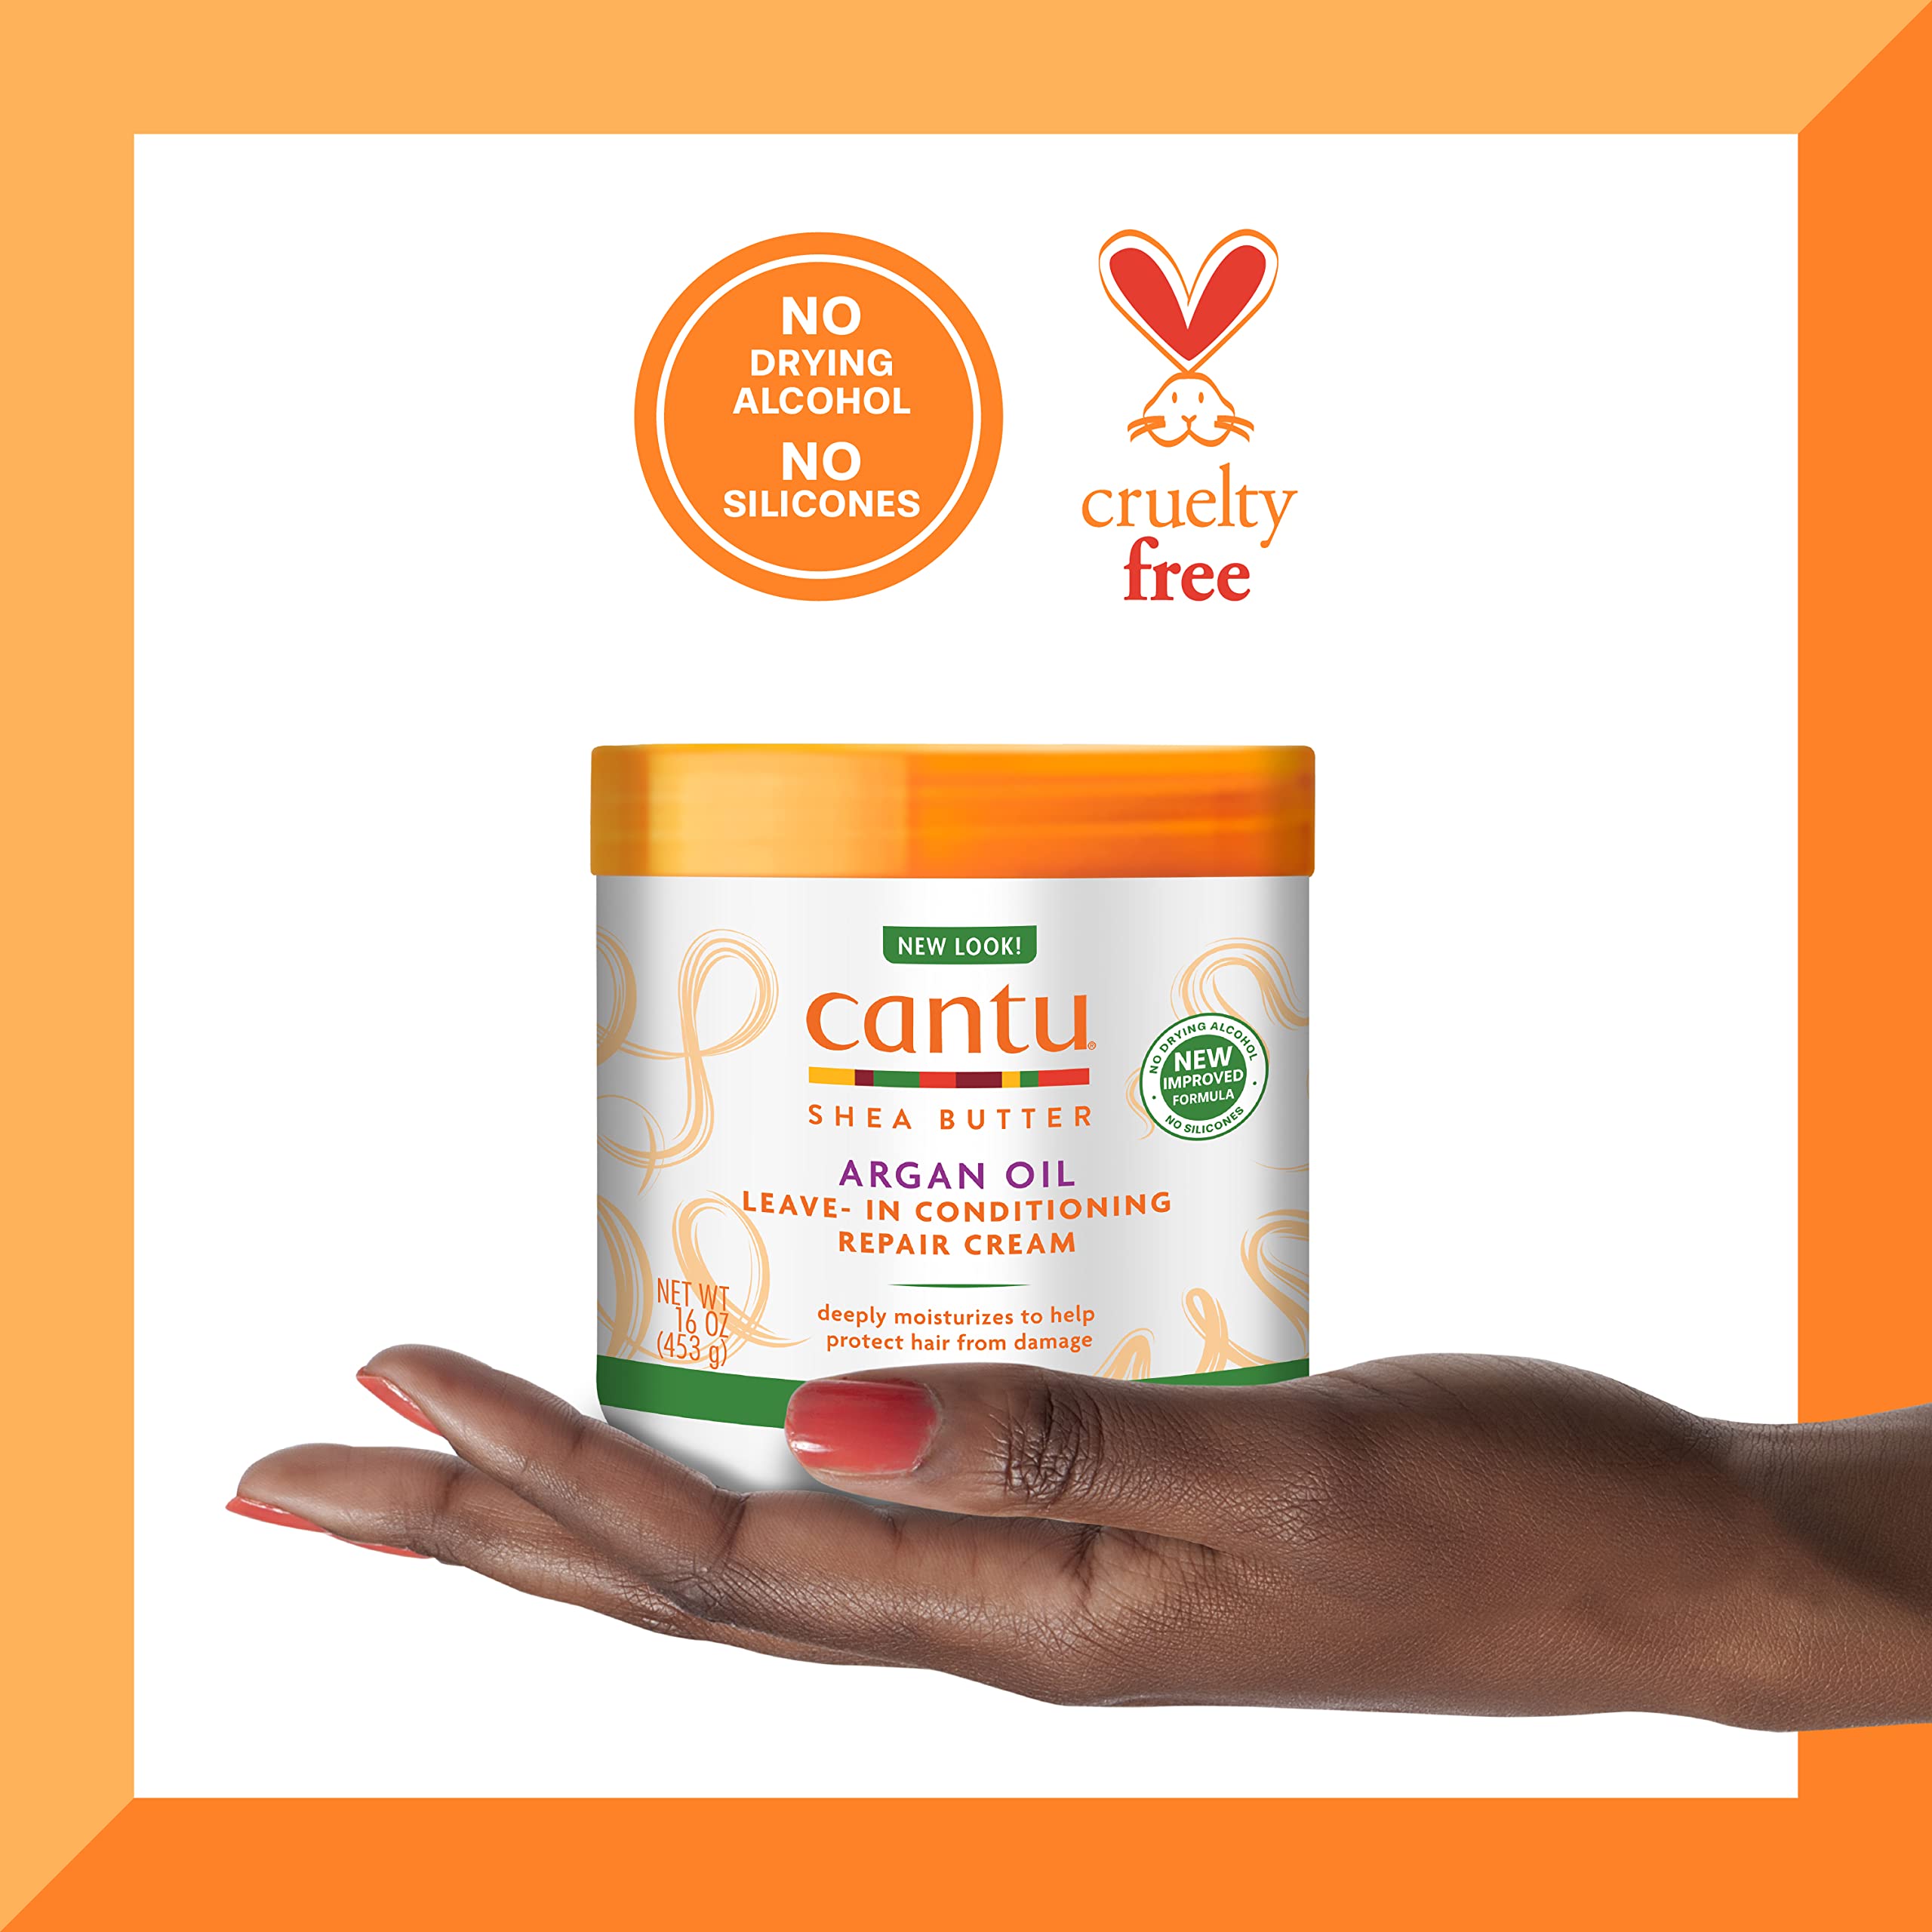 Cantu Leave-In Conditioning Repair Cream with Argan Oil, 16 oz (Packaging May Vary)